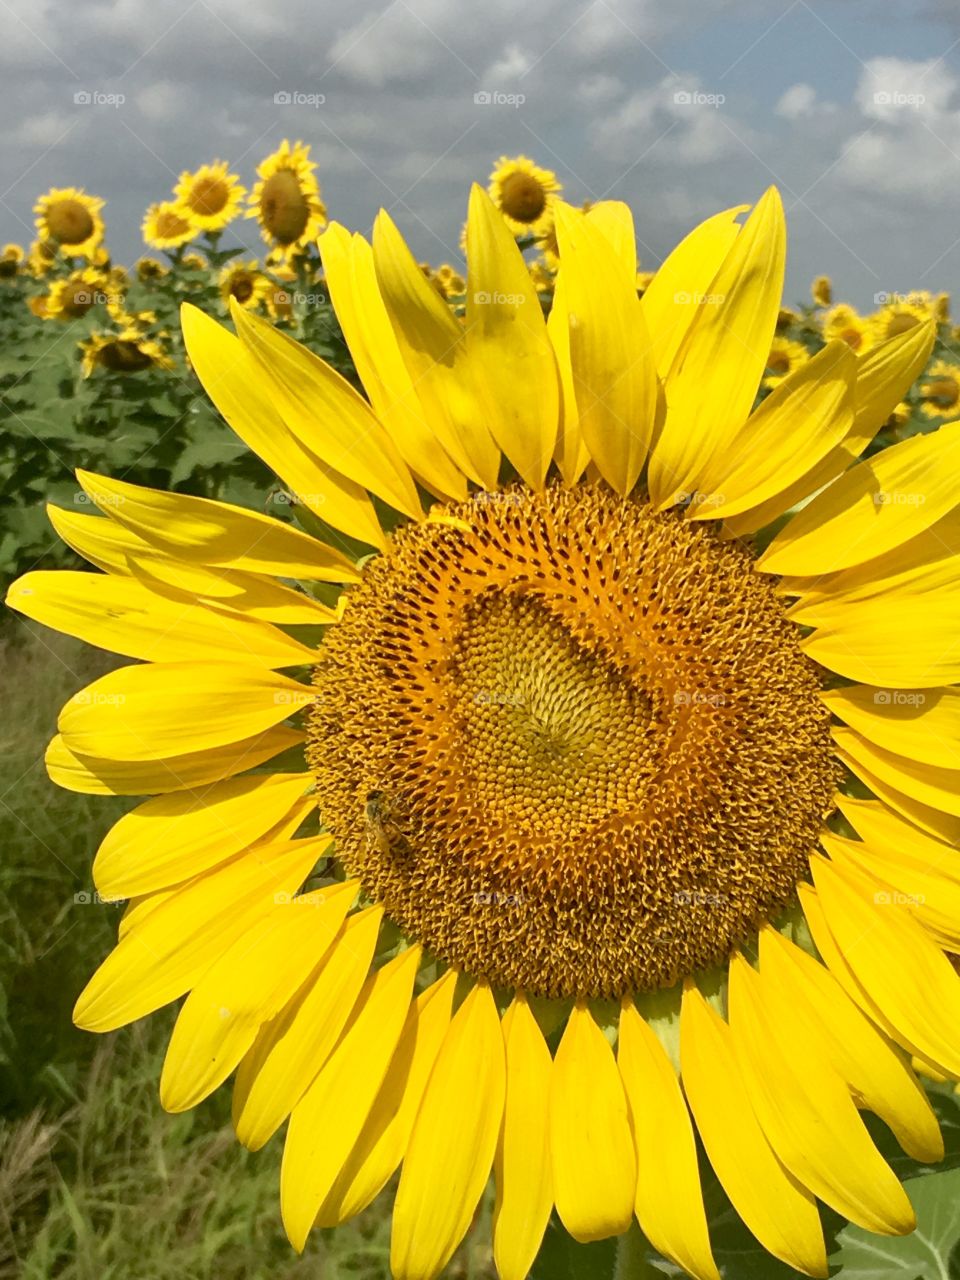 South Texas sunflowers 